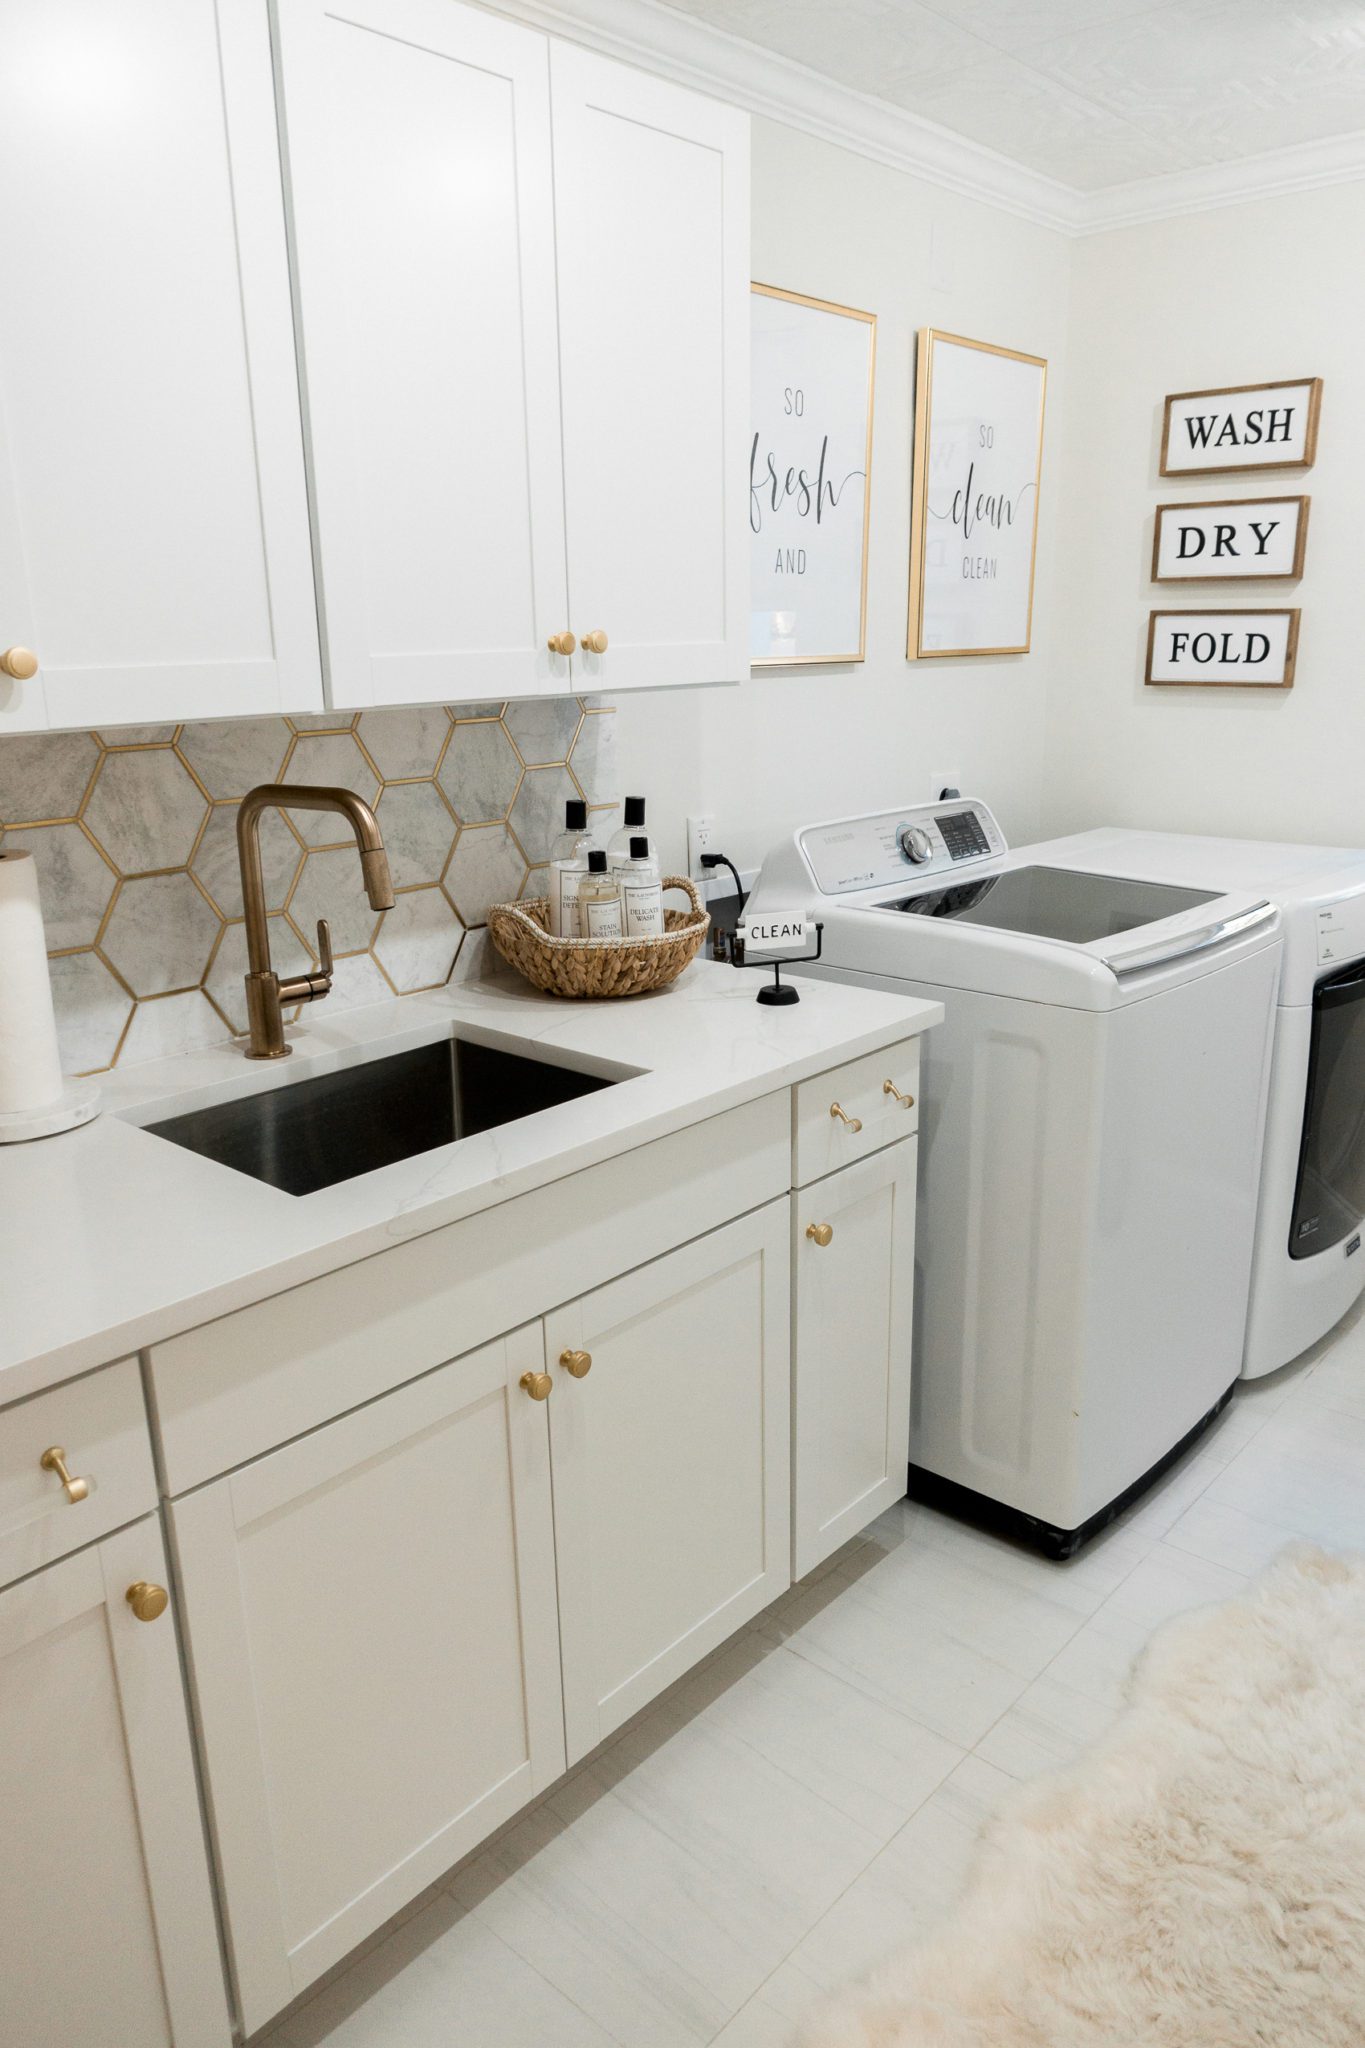 Kitchen Sink Cabinet Organization Ideas and Solutions - Modern Glam